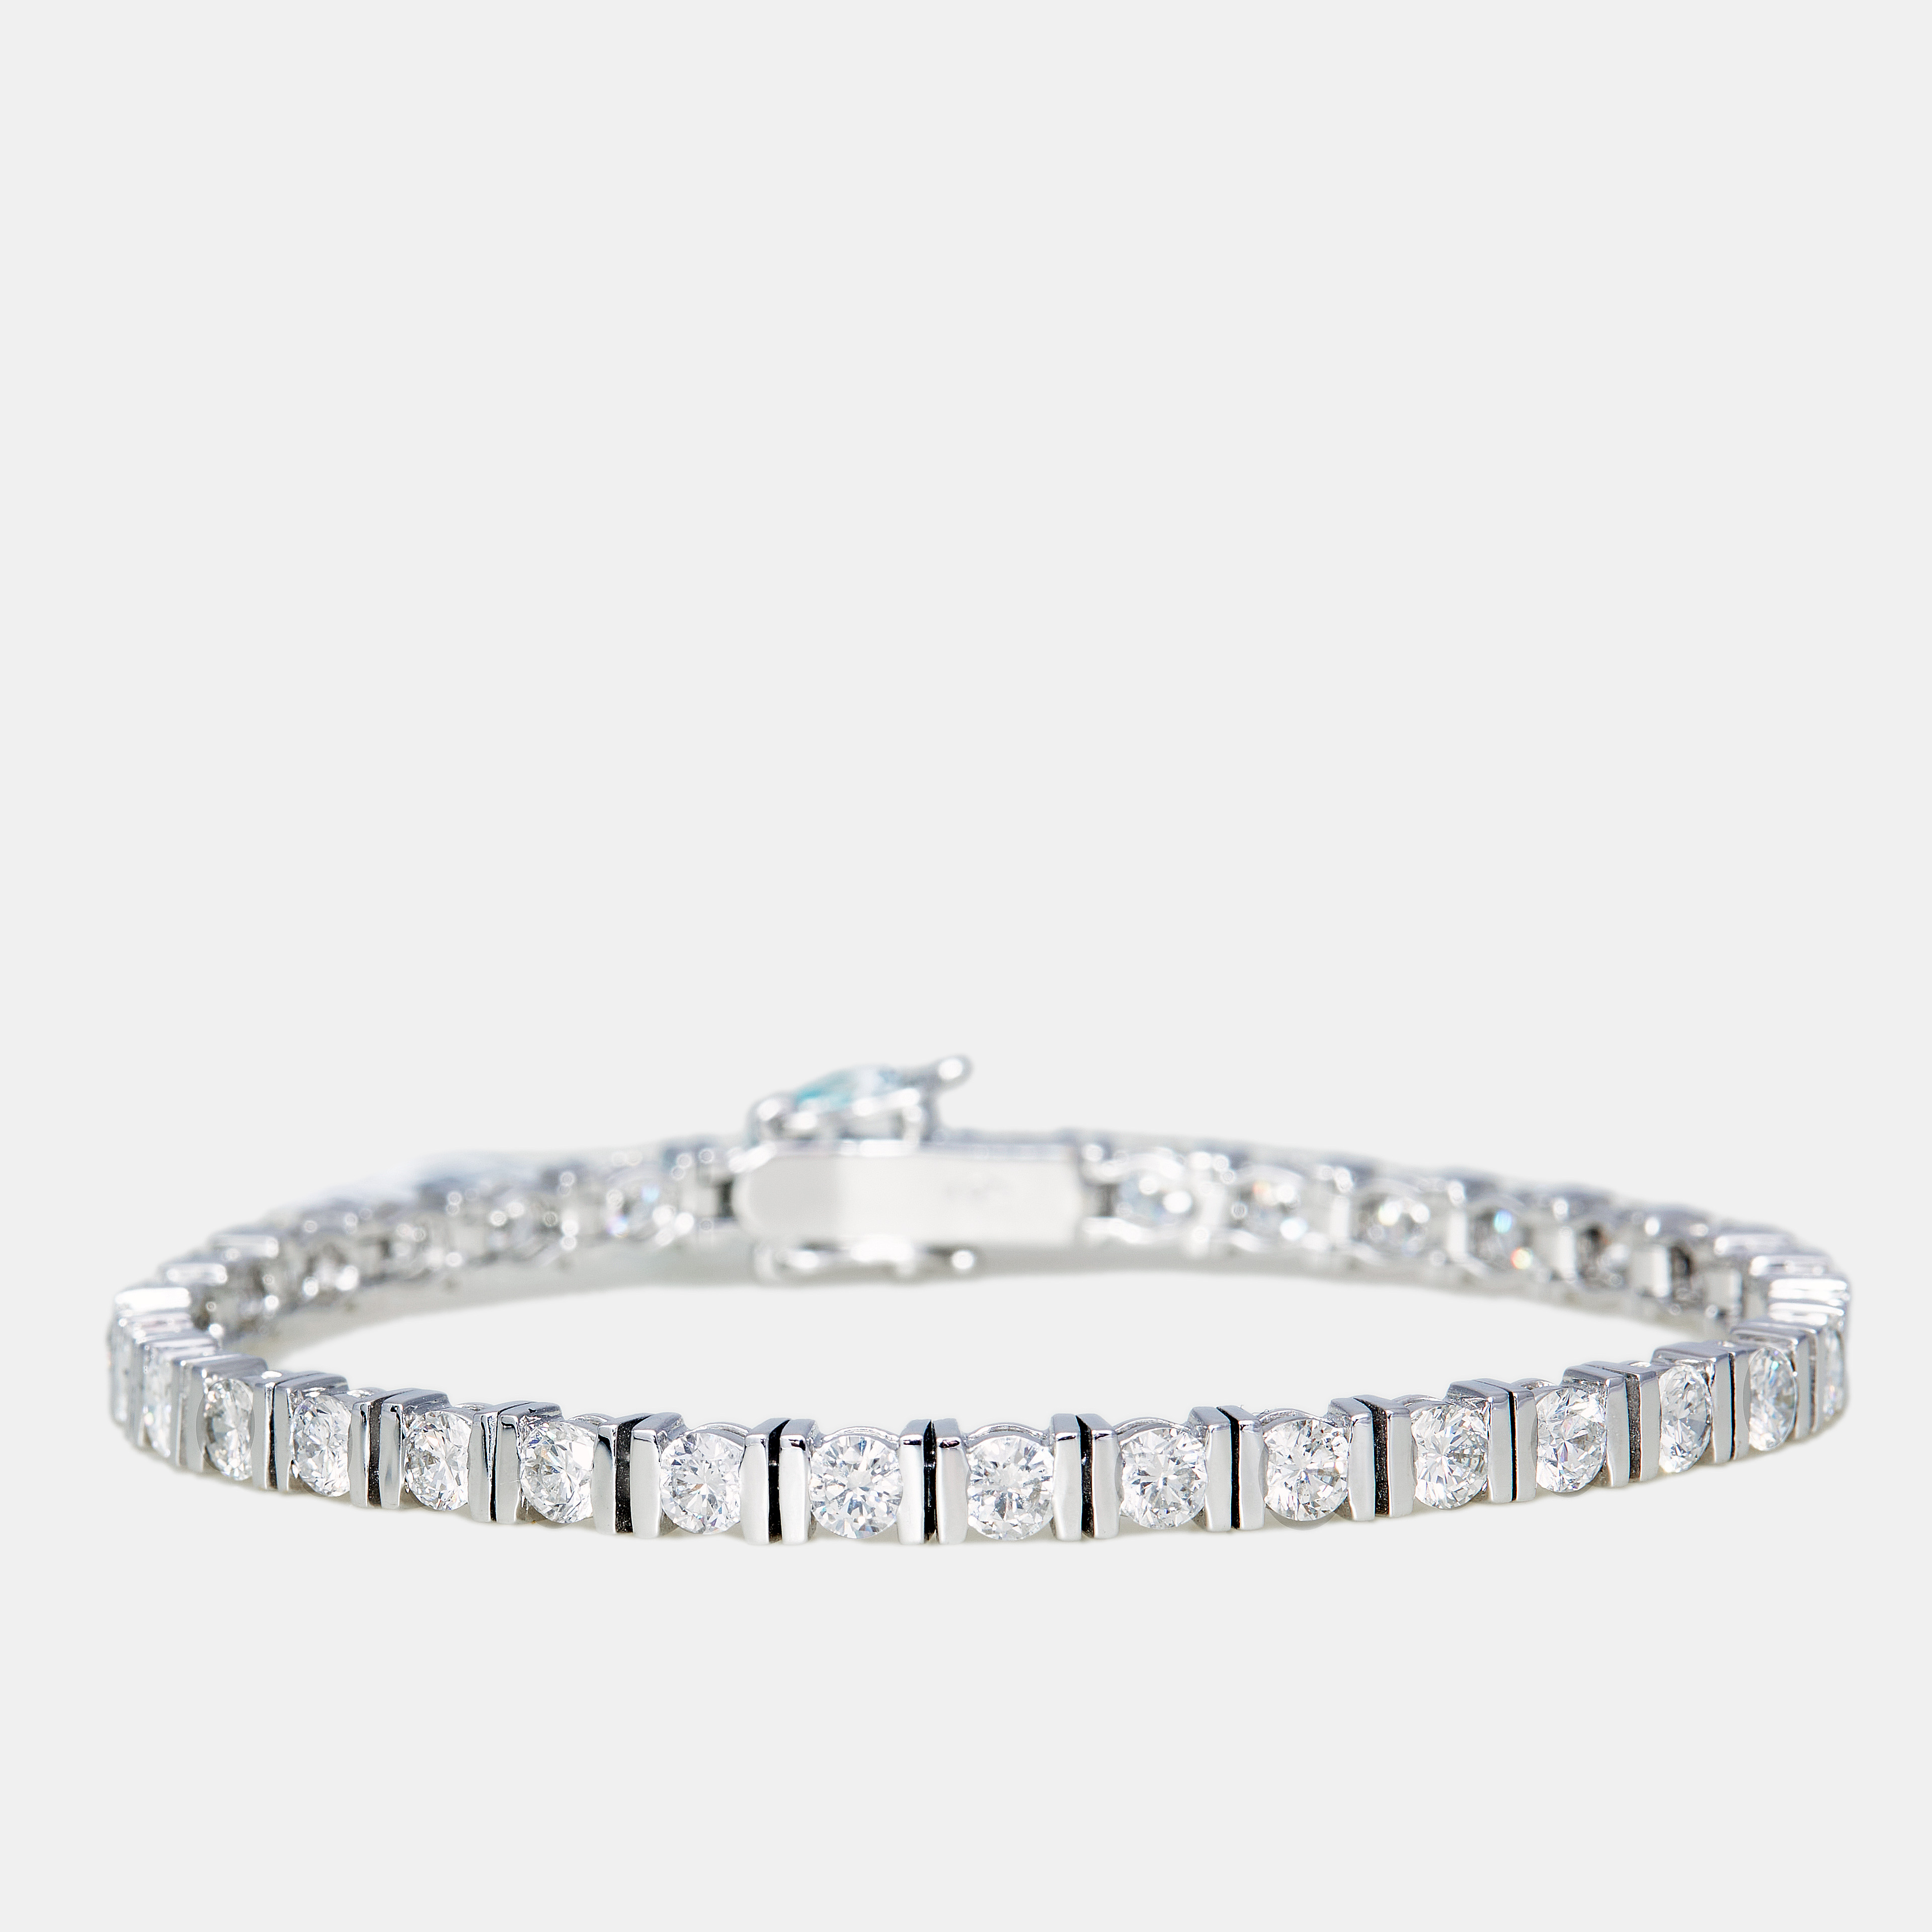 The diamond edit 18k white gold 7.1 ct diamond bracelet